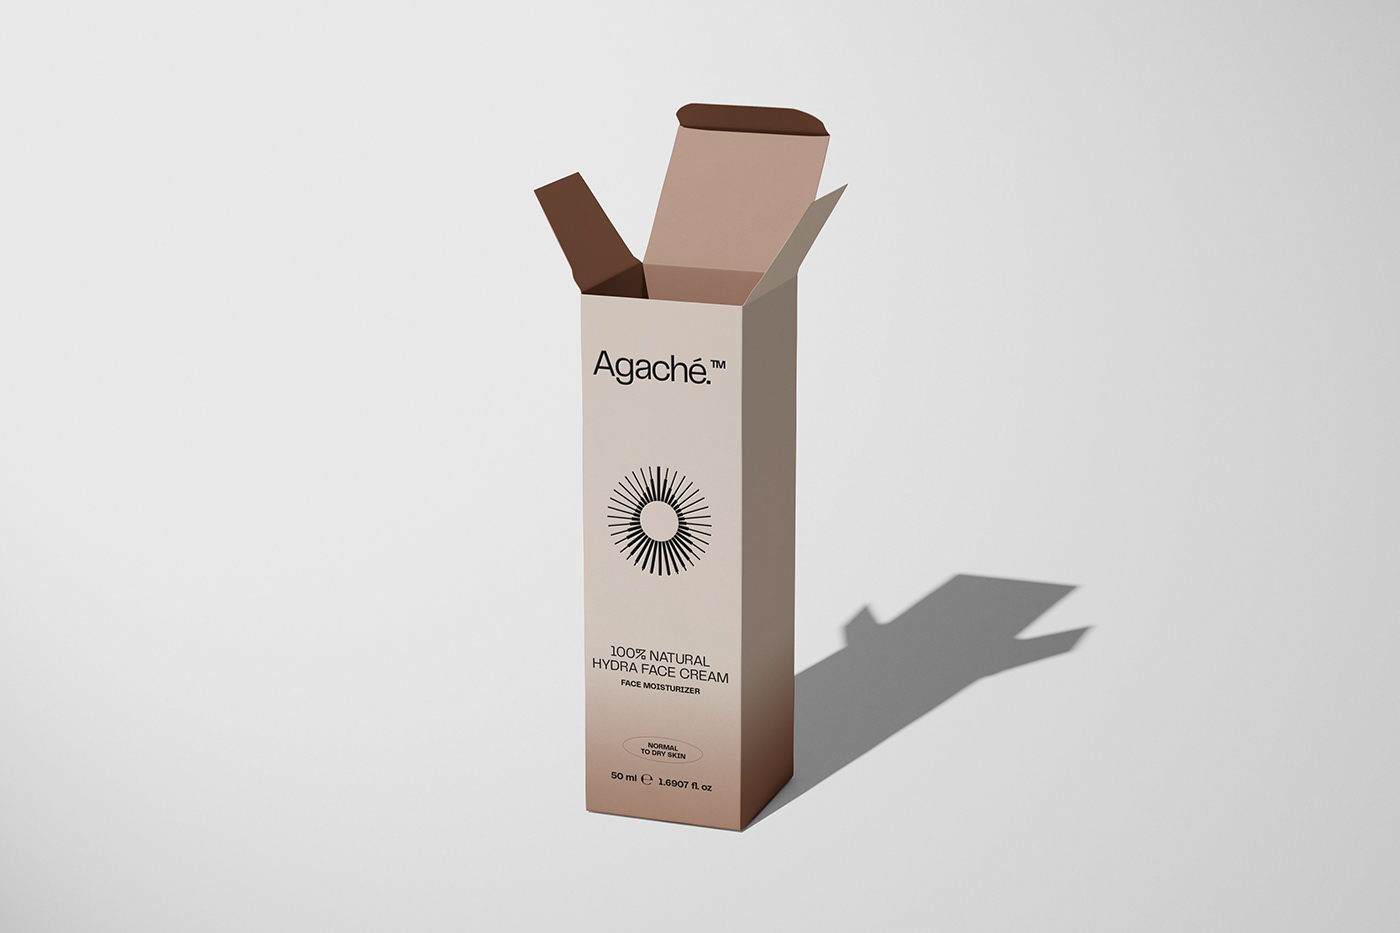 Agache天然护肤产品品牌和包装设计